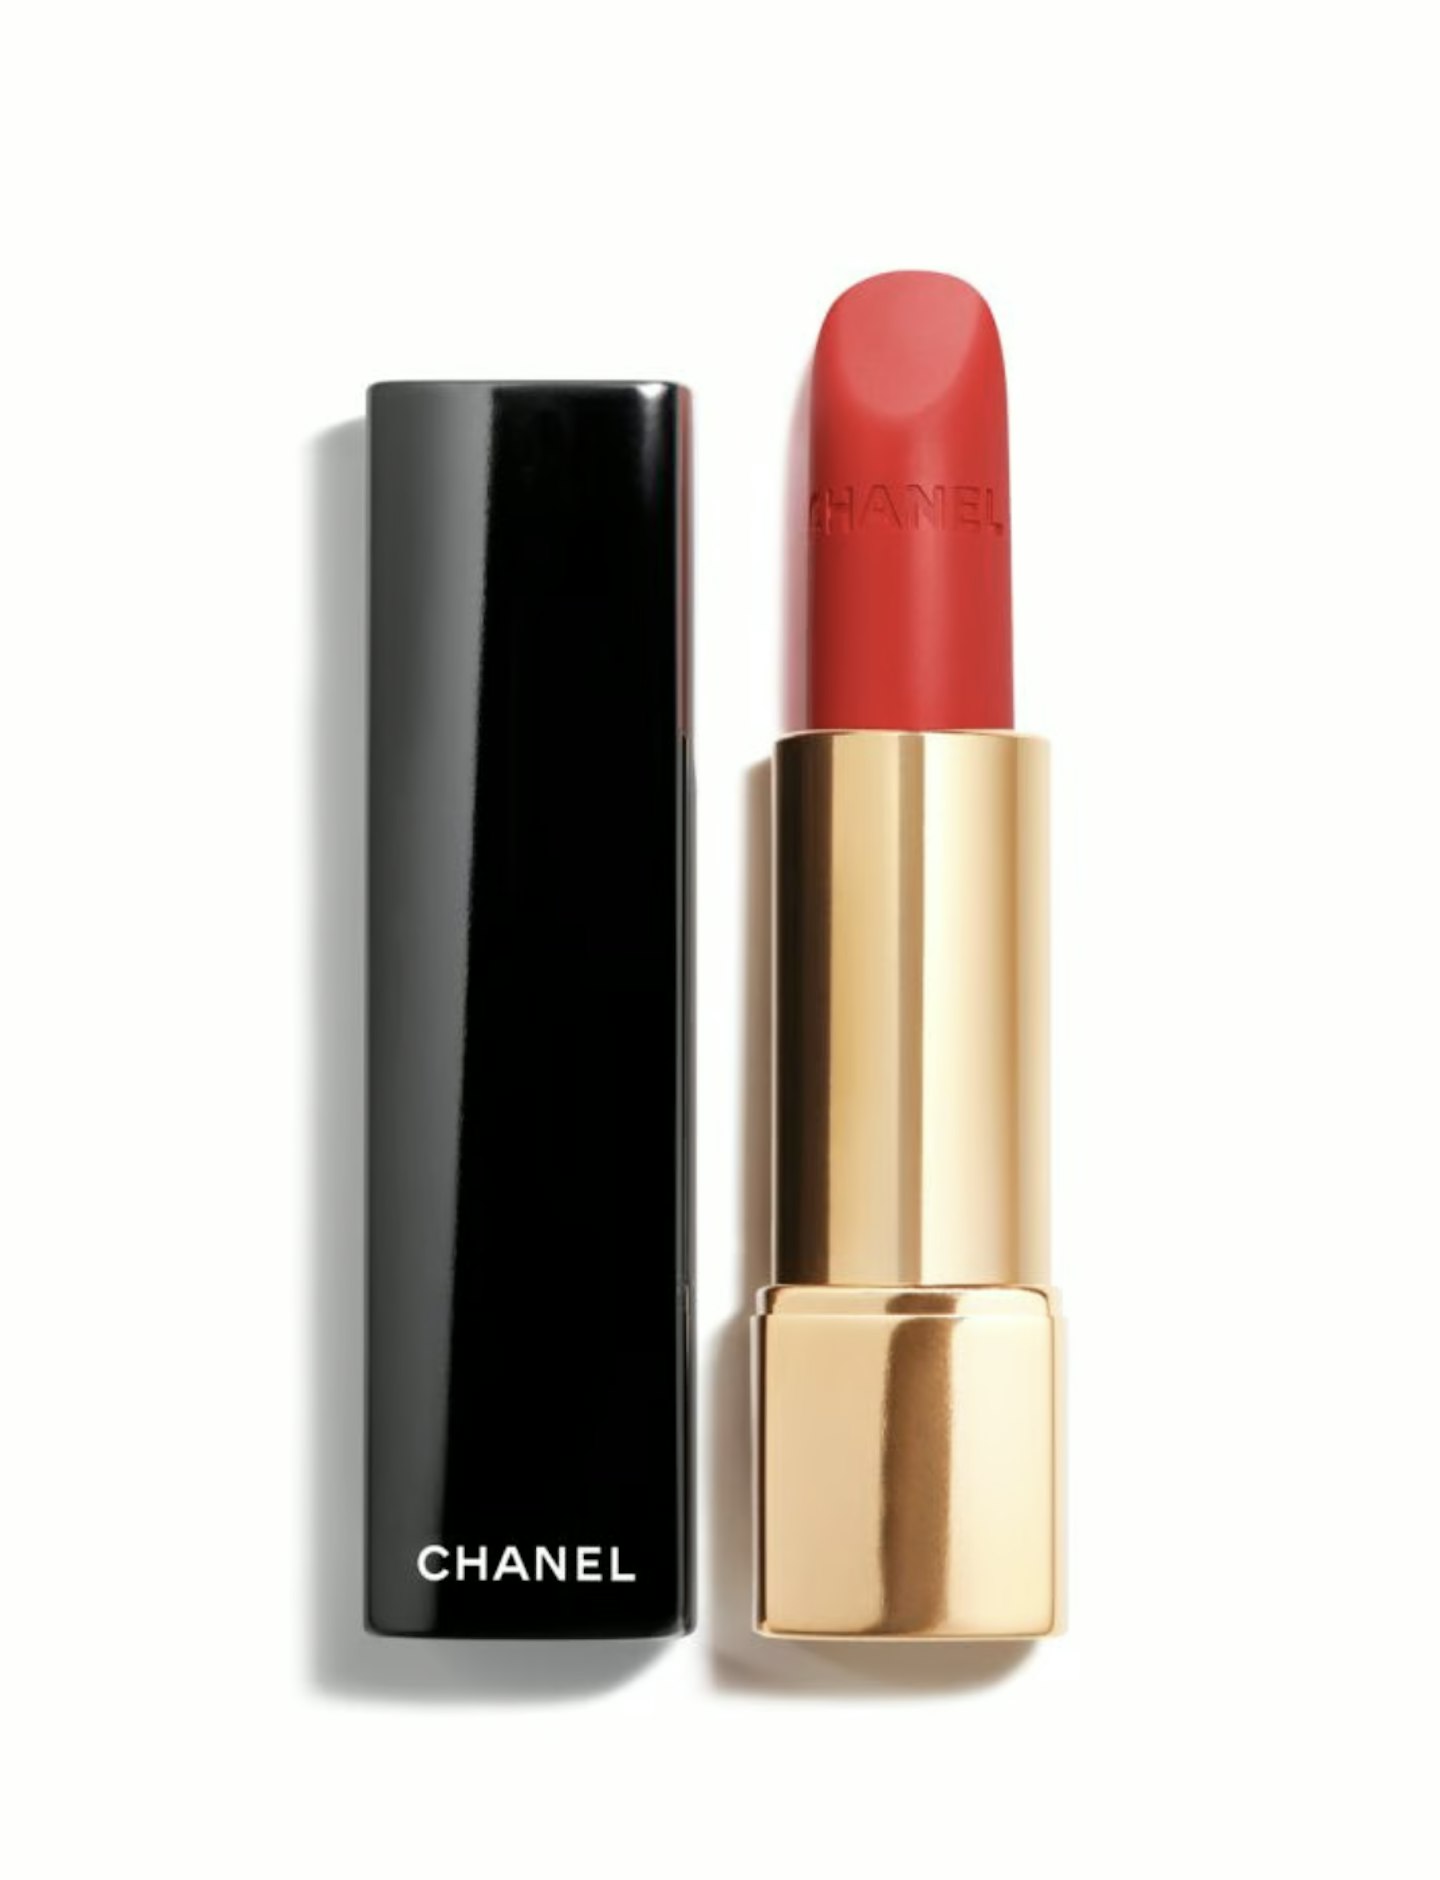 Chanel Rouge Allure Luminous Matte Lip Colour in 57 Rouge Feu red lipstick